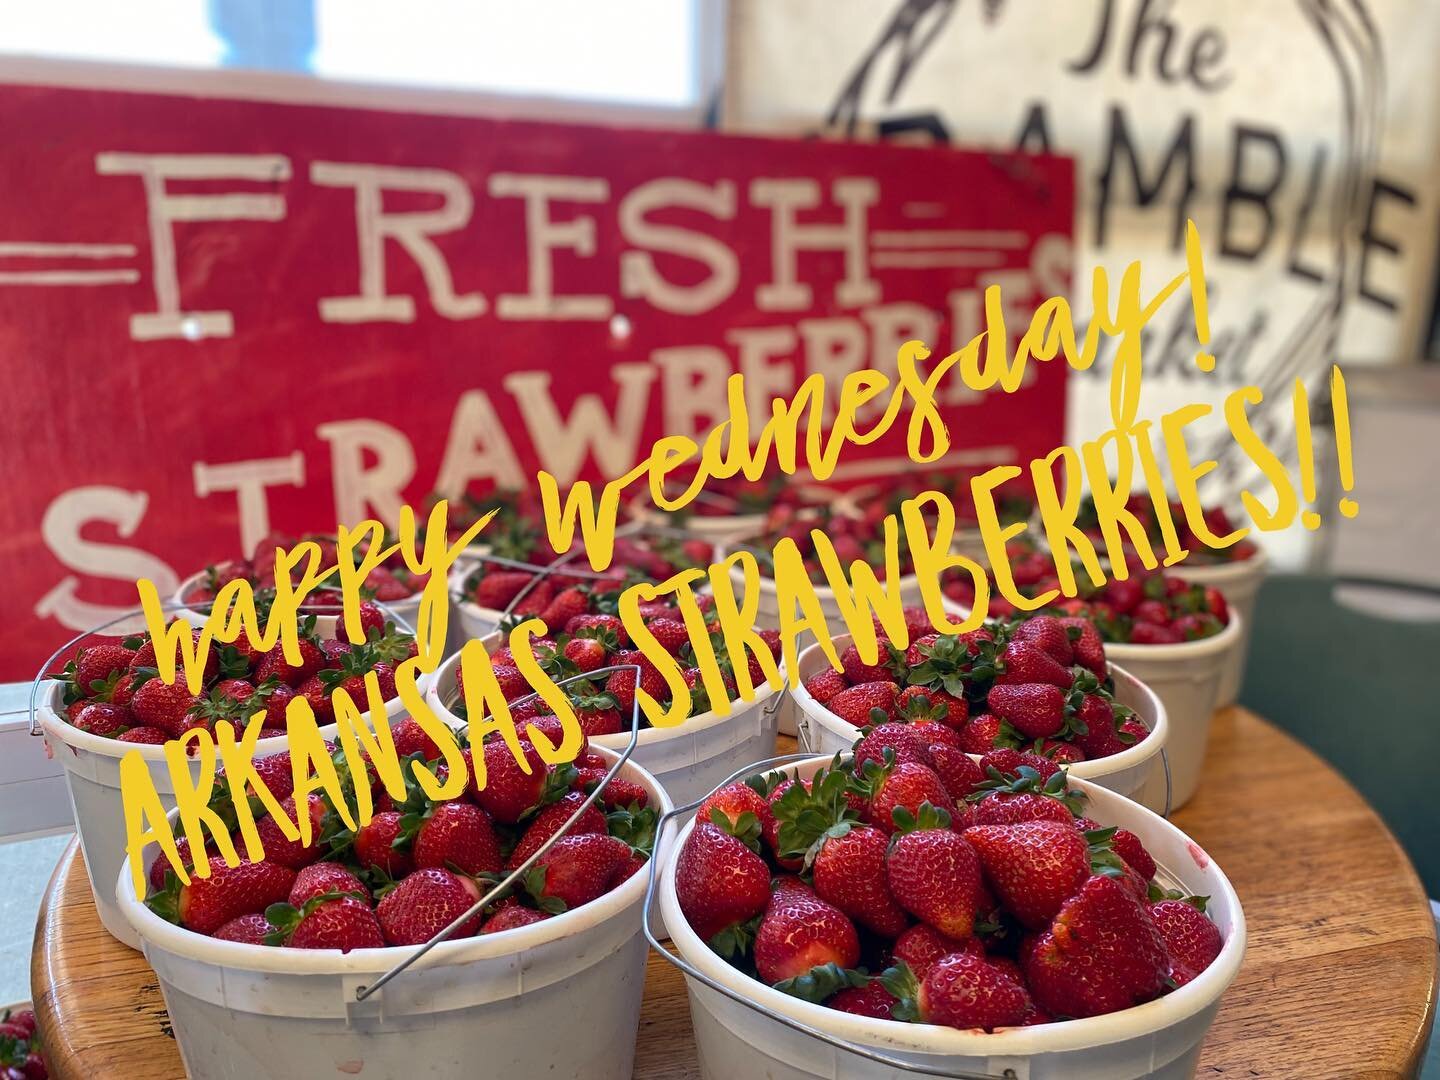 🍓🍓Arkansas Strawberries! #goingstrong #gatherinspirecultivategrow #supportlocal #arkansasfarms #strawberries🍓 #arkansas